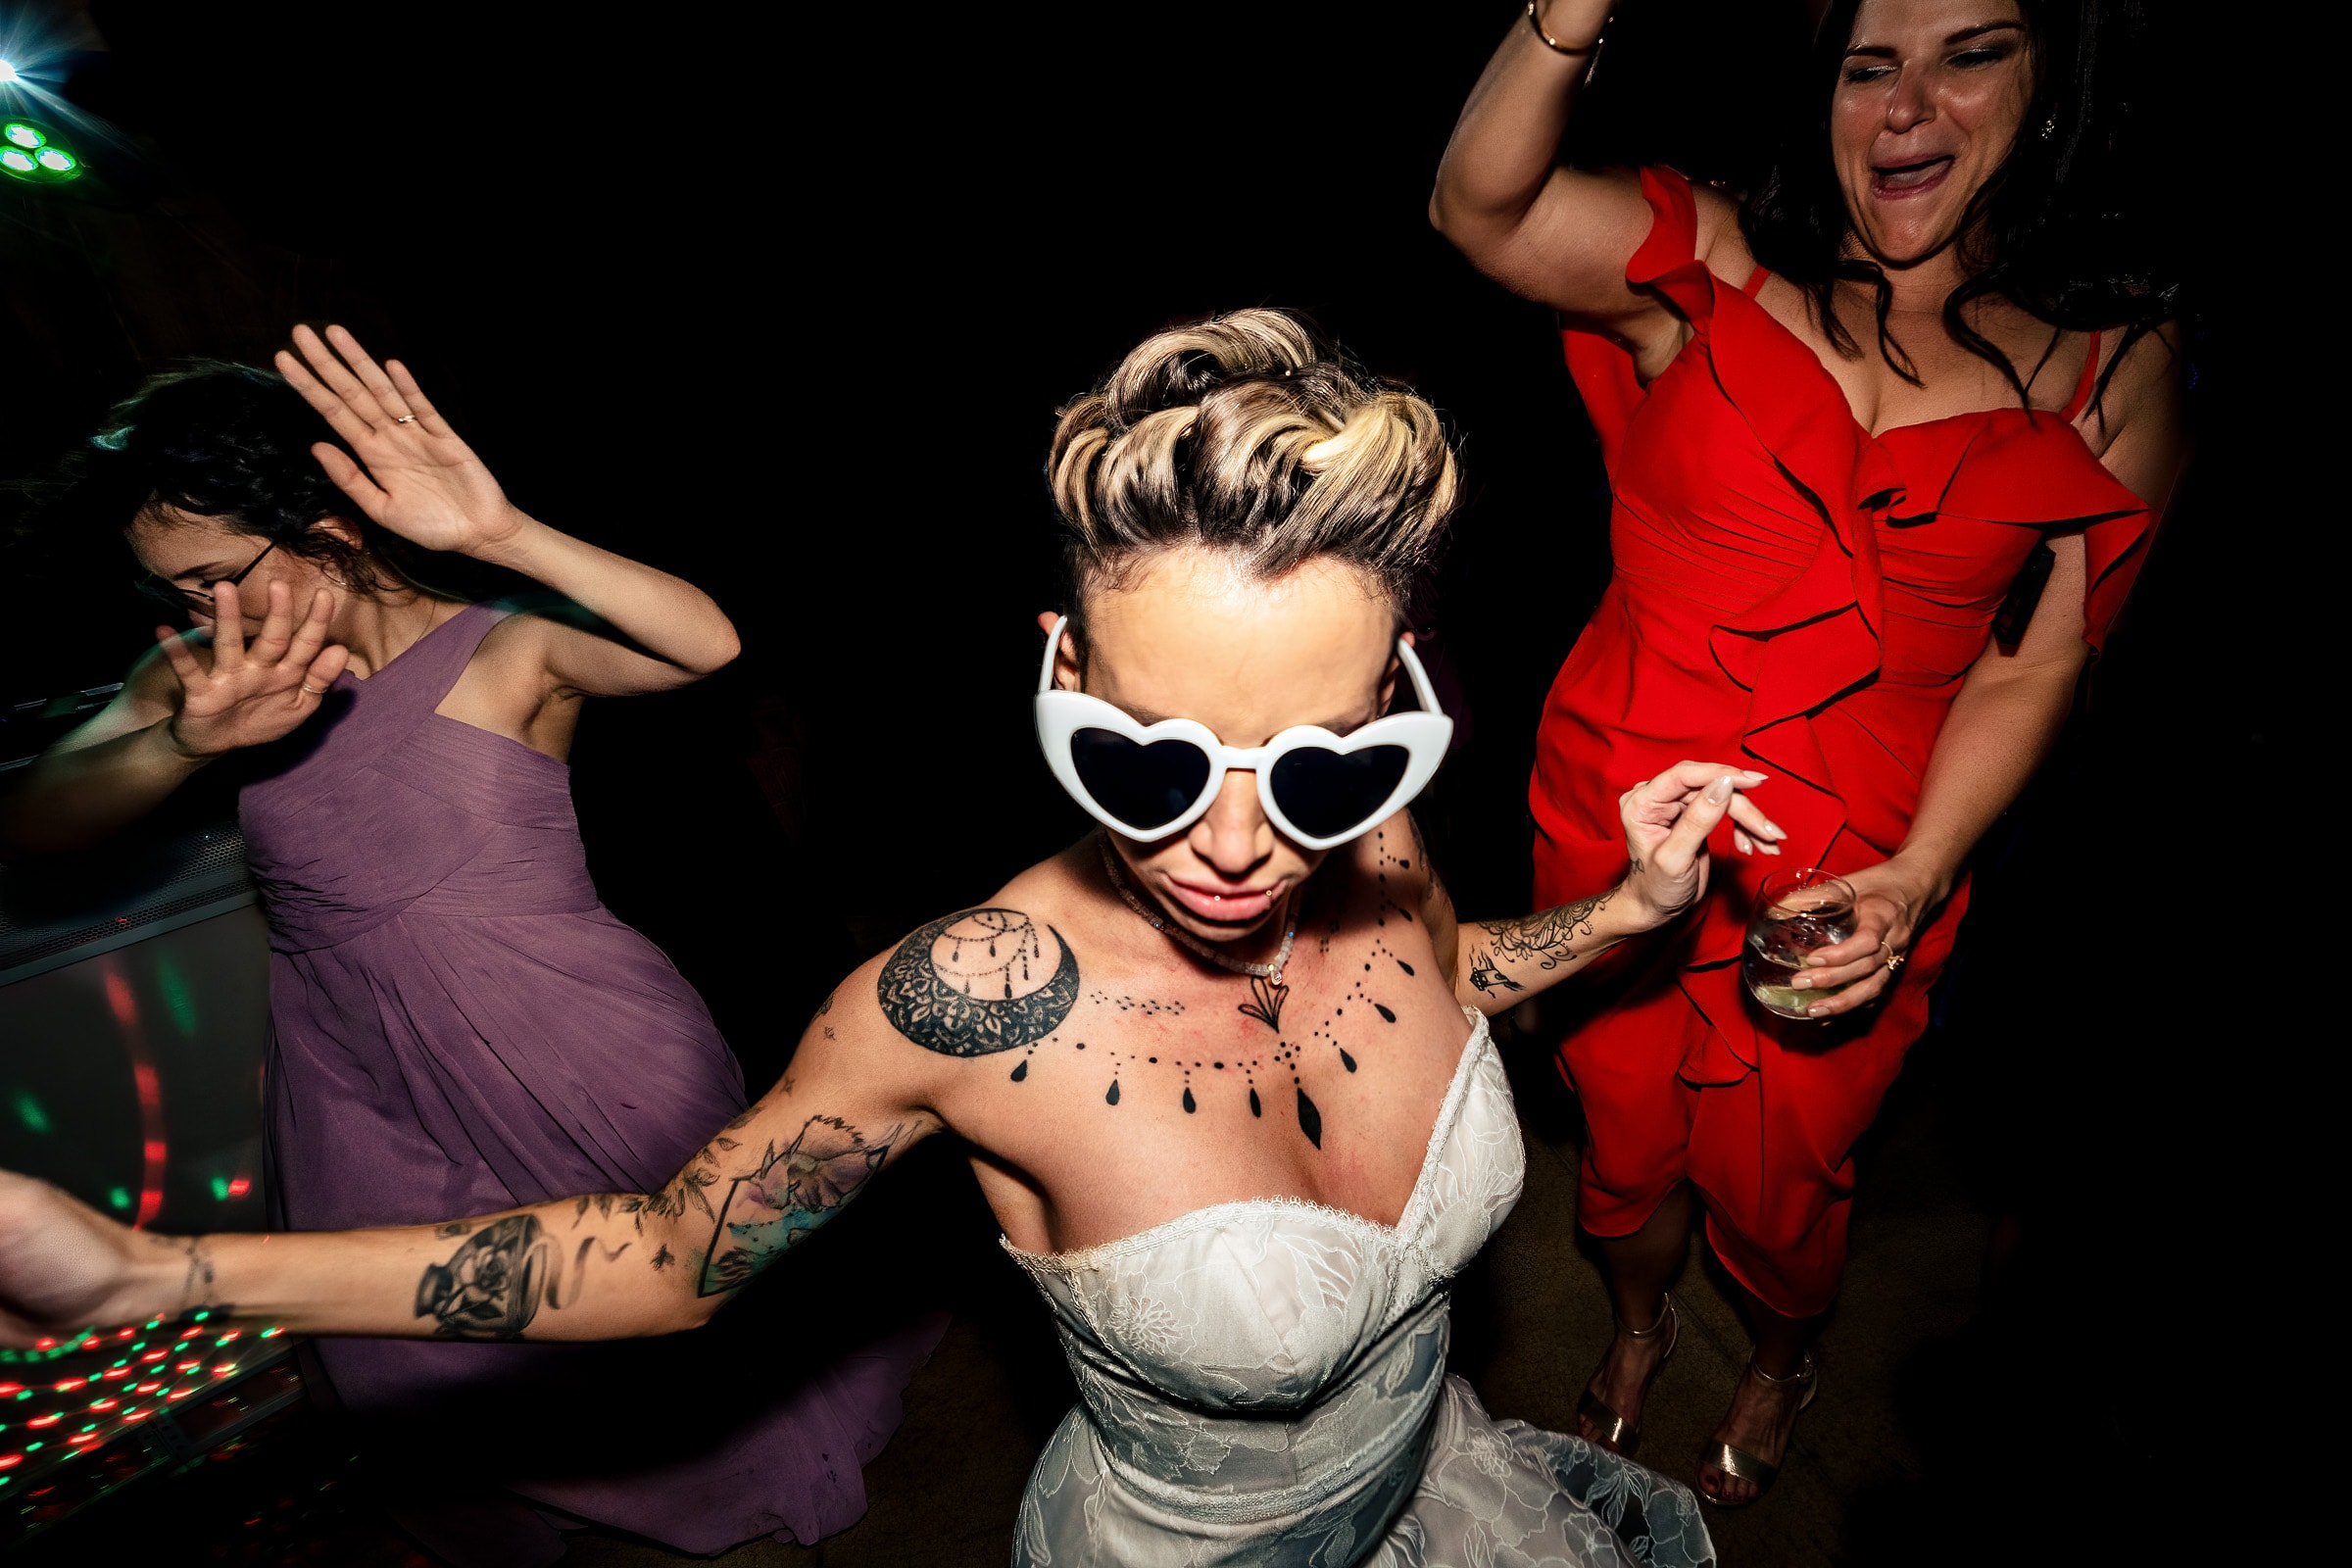 Bride wearing heart shaped white sunglasses at her wedding reception | Kivus & Camera